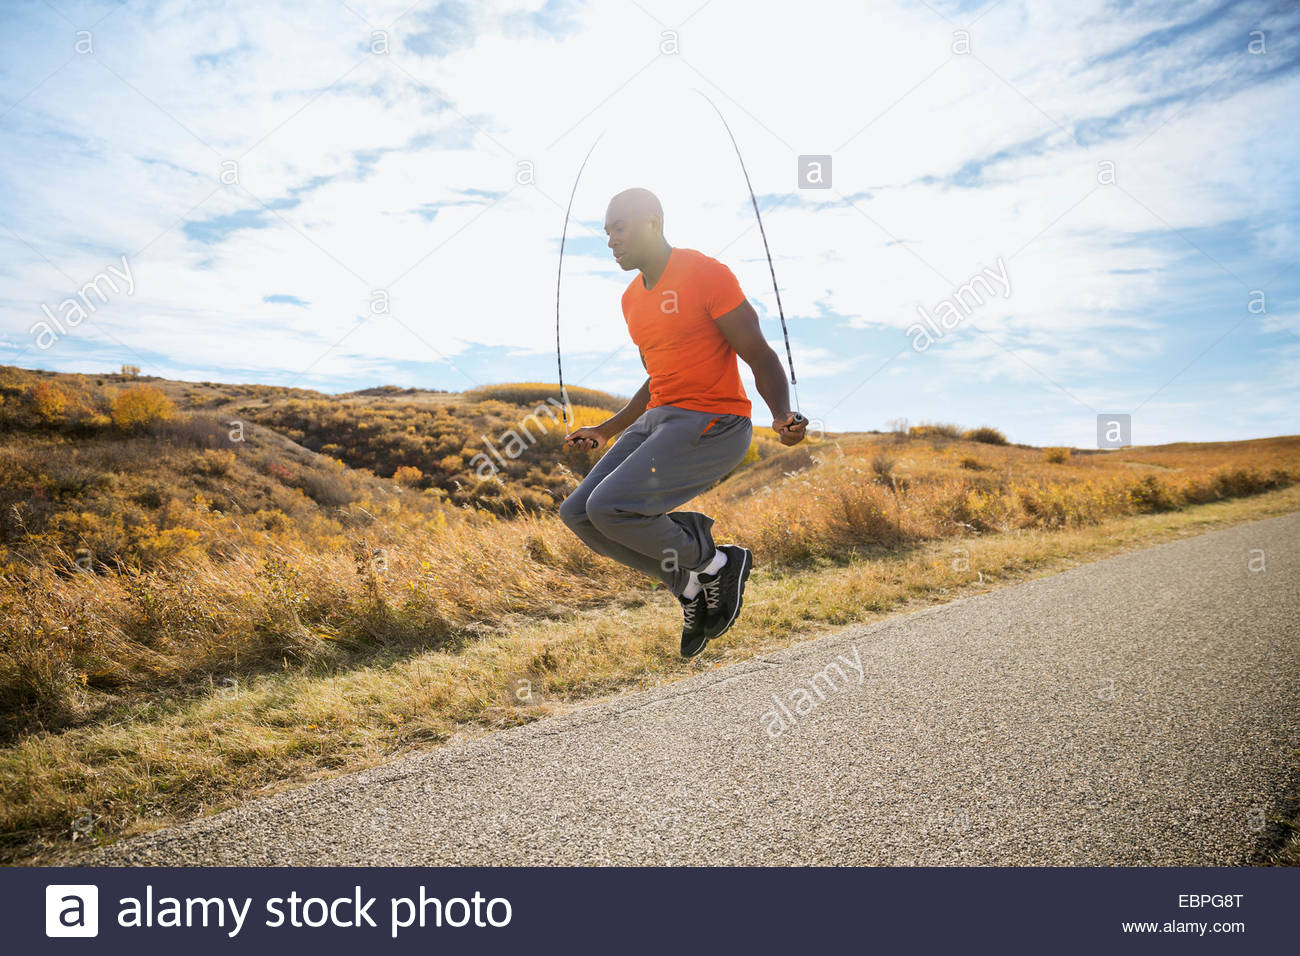 Man jump roping on sunny rural path Stock Photo